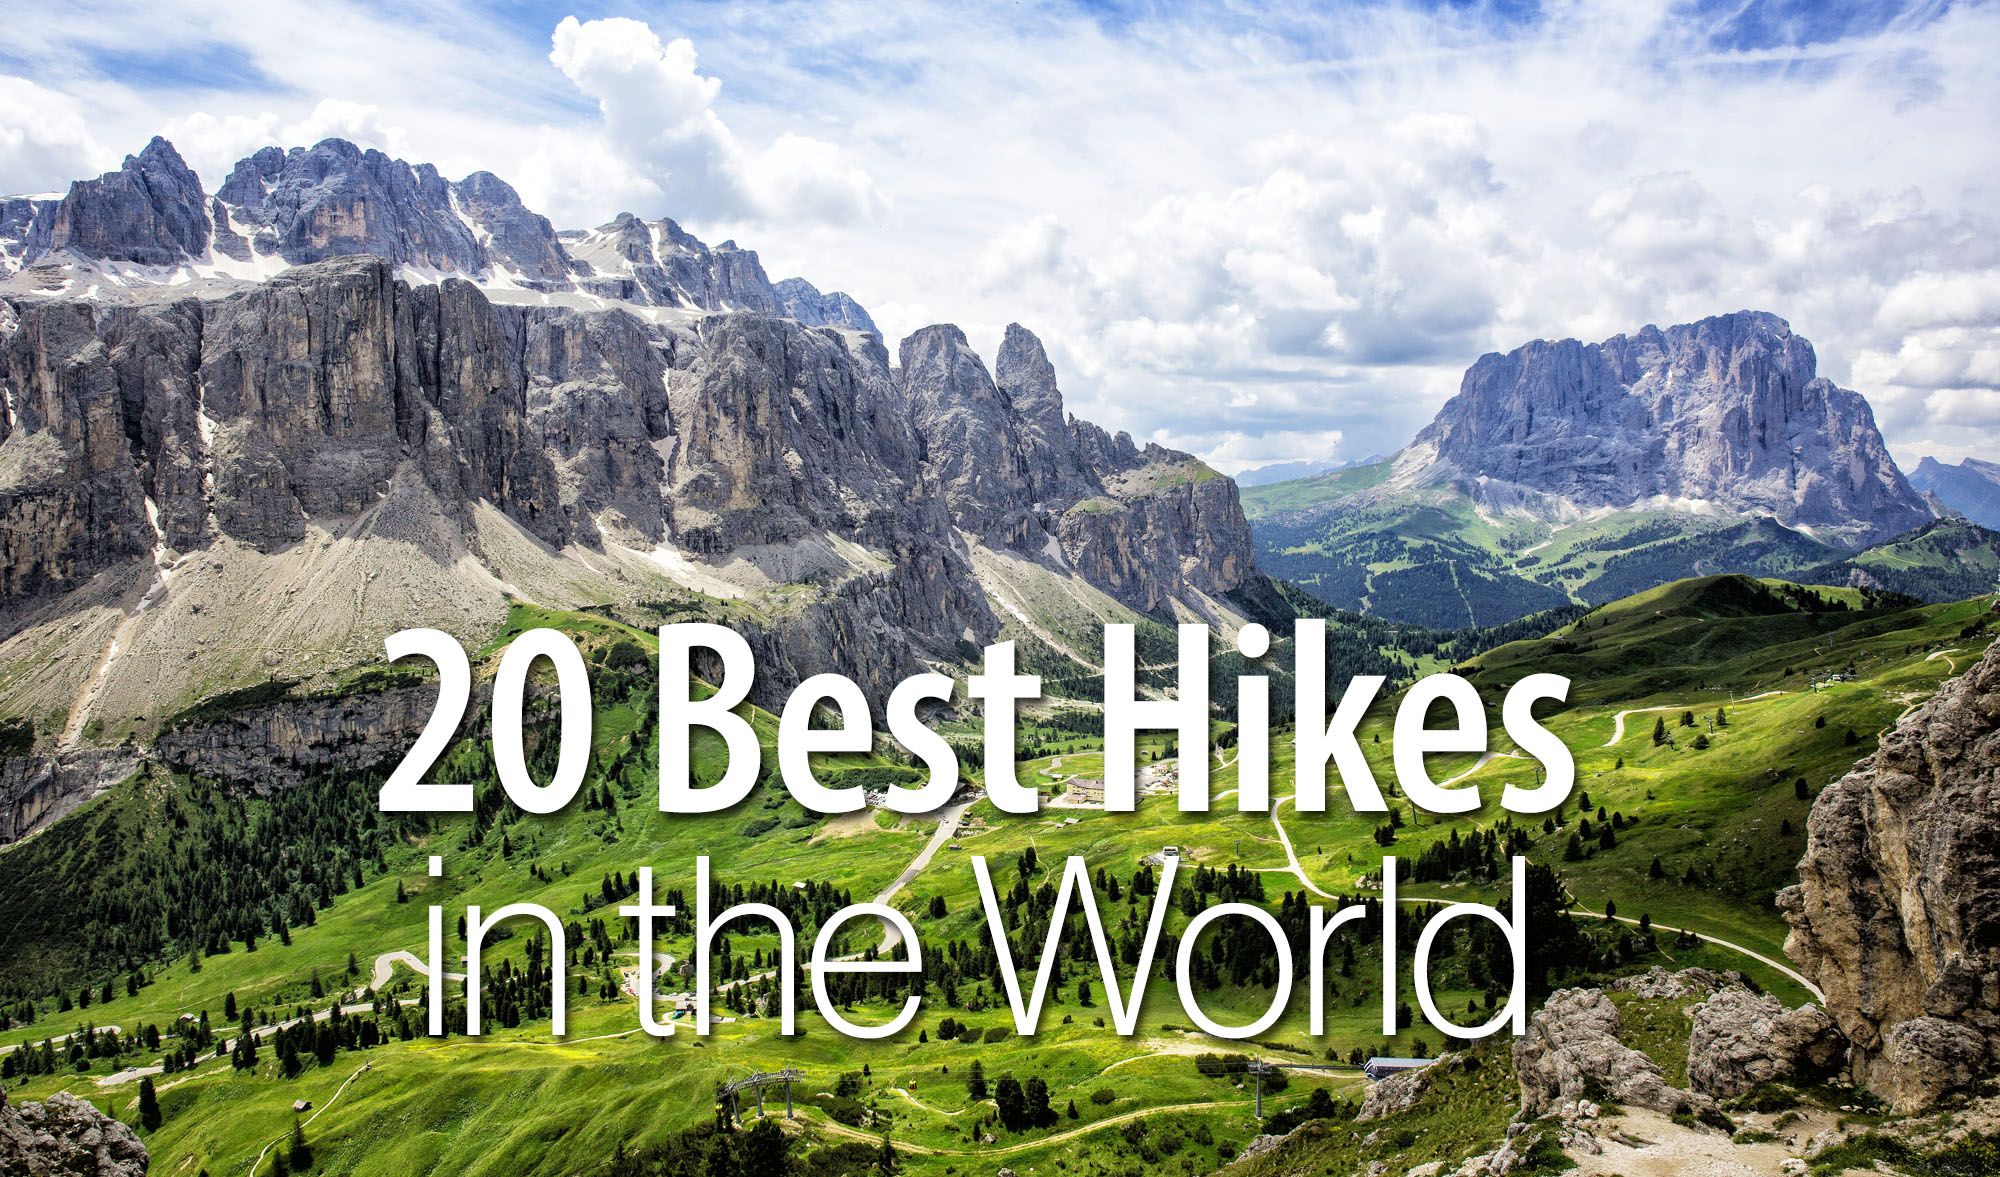 20 Best Day Hikes World